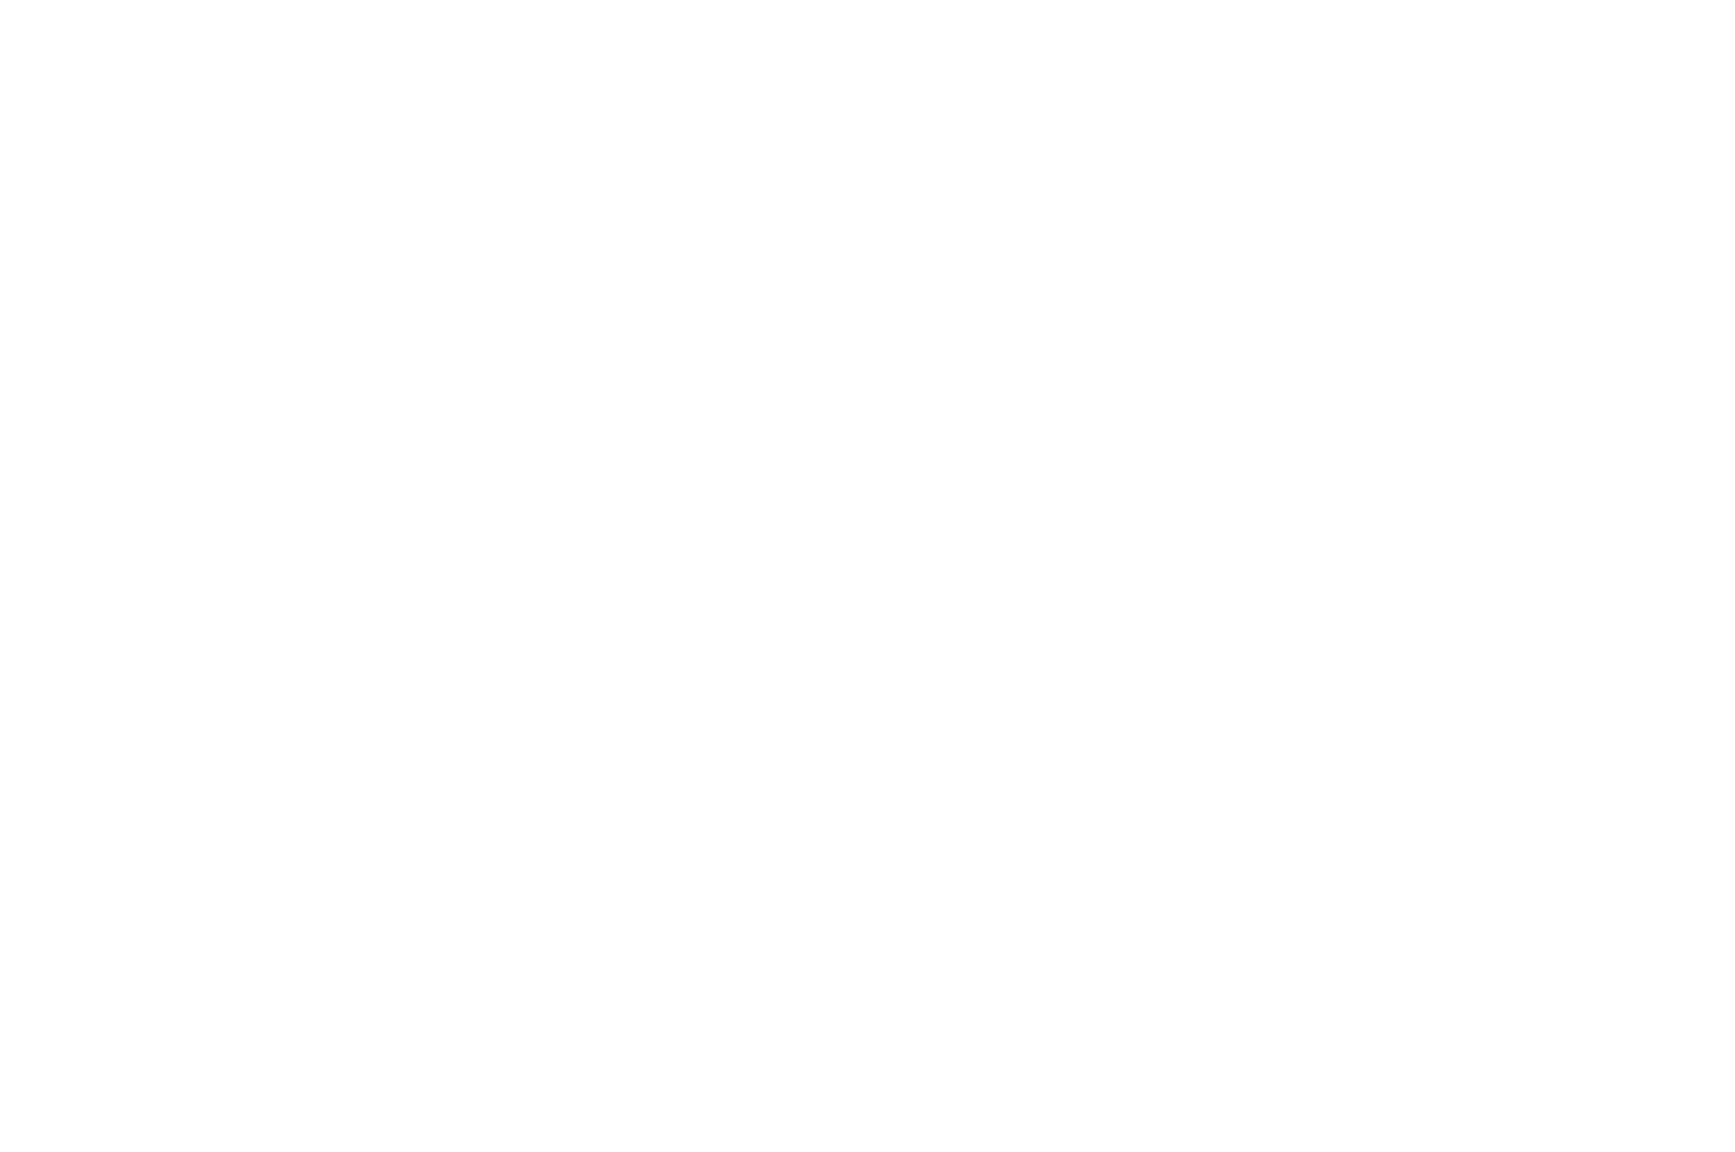 FINALIST+-+Moving+Parts+Film+Festival+-+2018.png